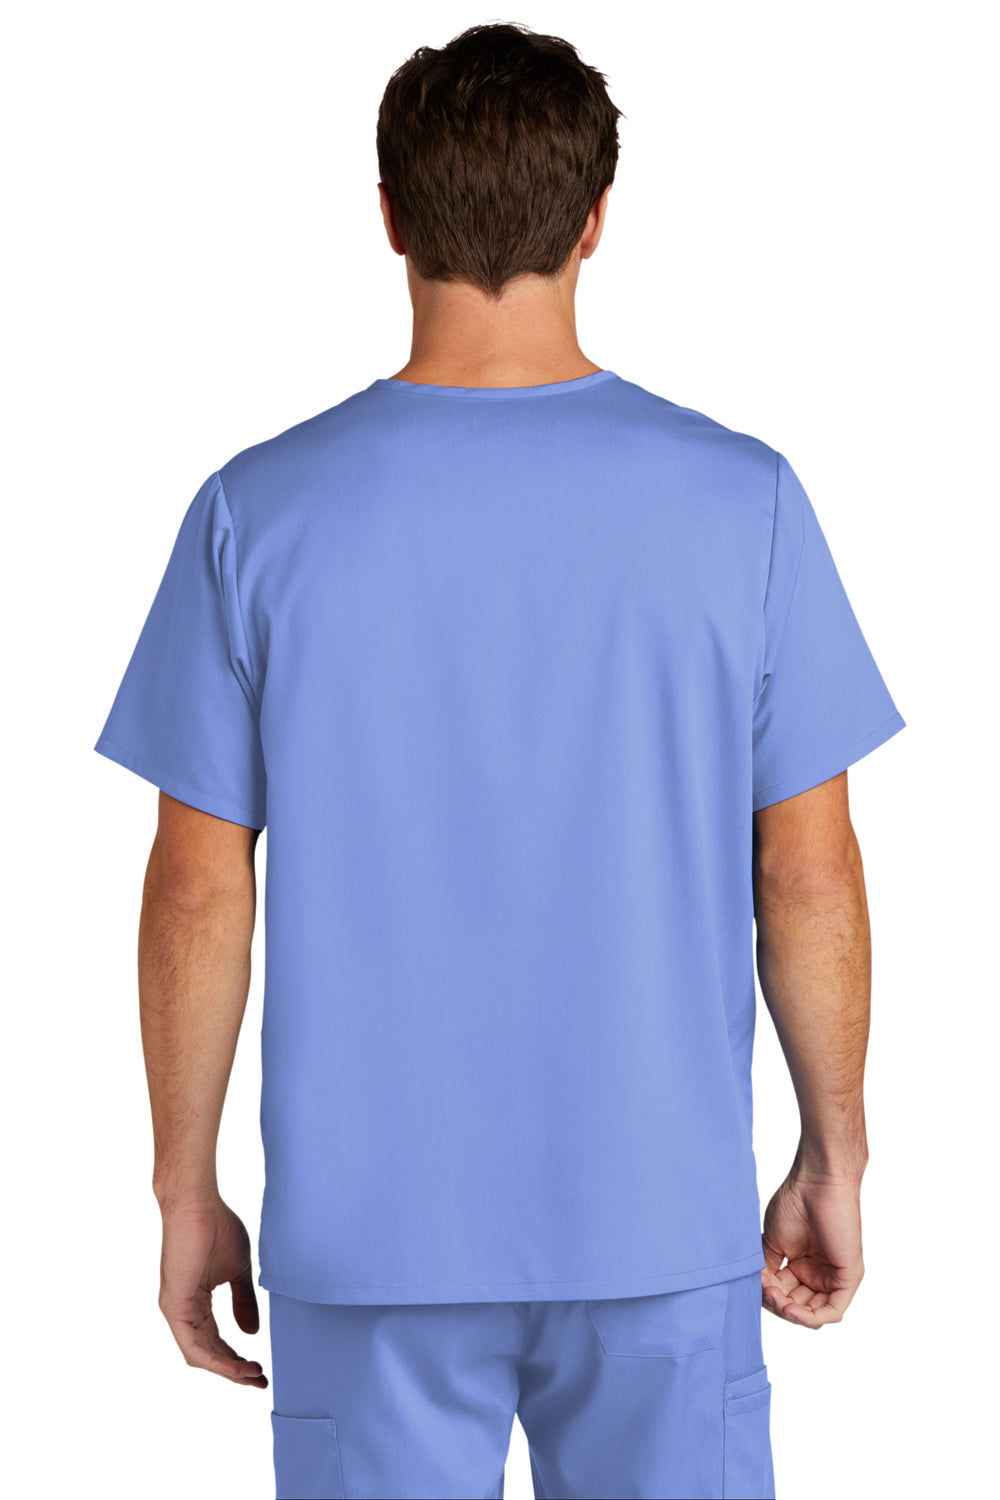 Wonderwink WW5068 Premiere Flex Short Sleeve V-Neck Shirt Ceil Blue Back